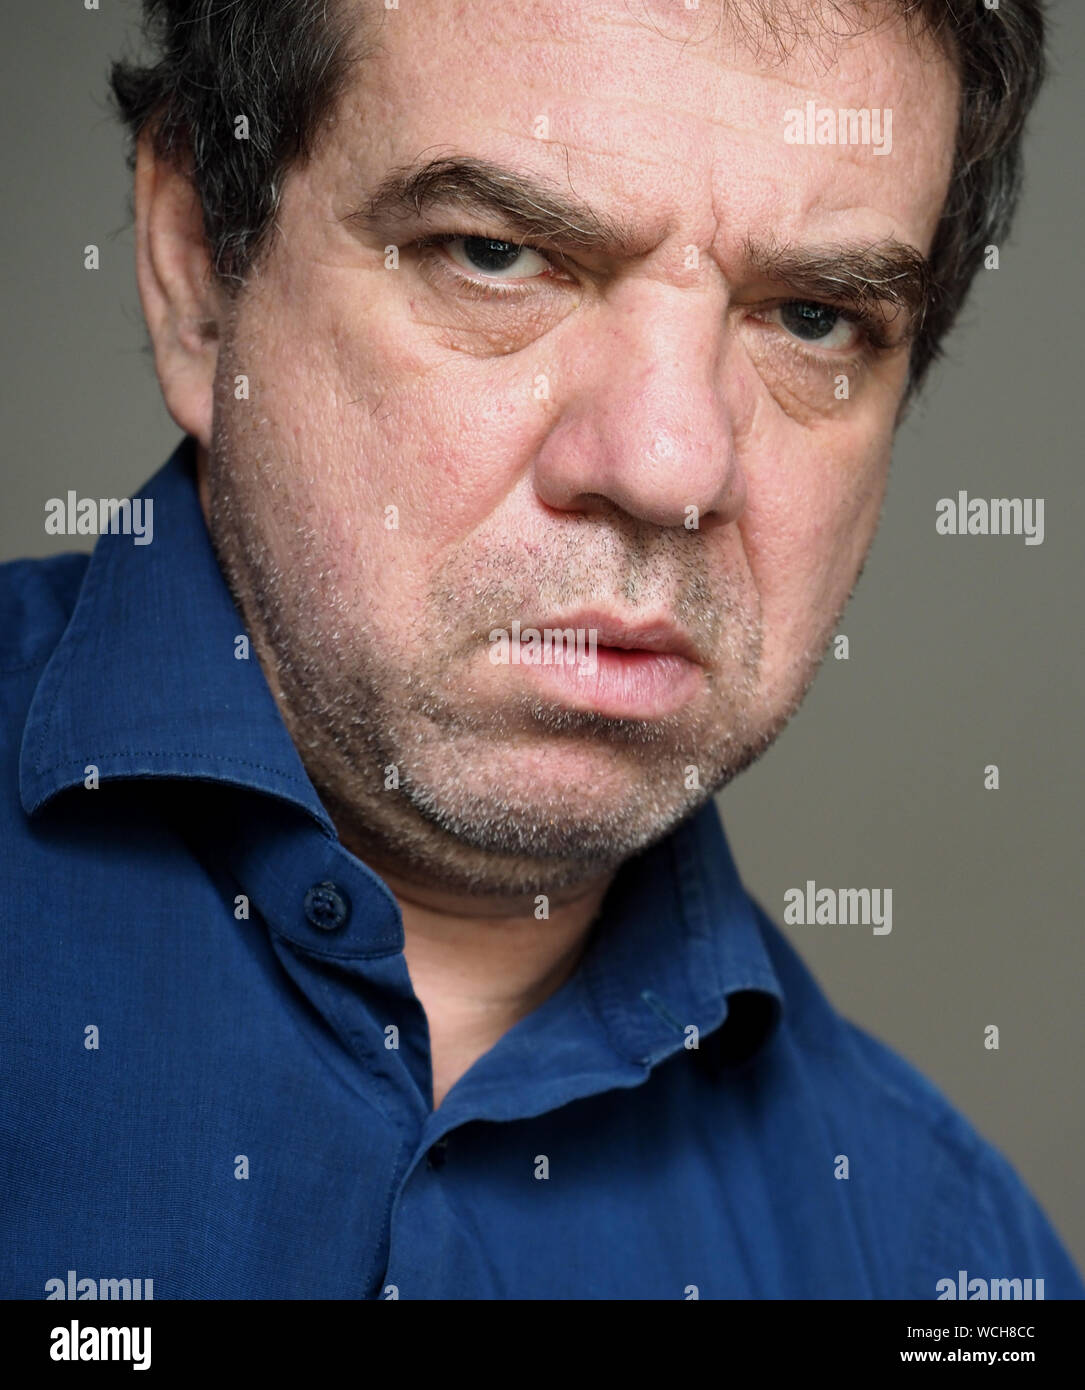 Close-up ritratto di Angry Man Foto Stock